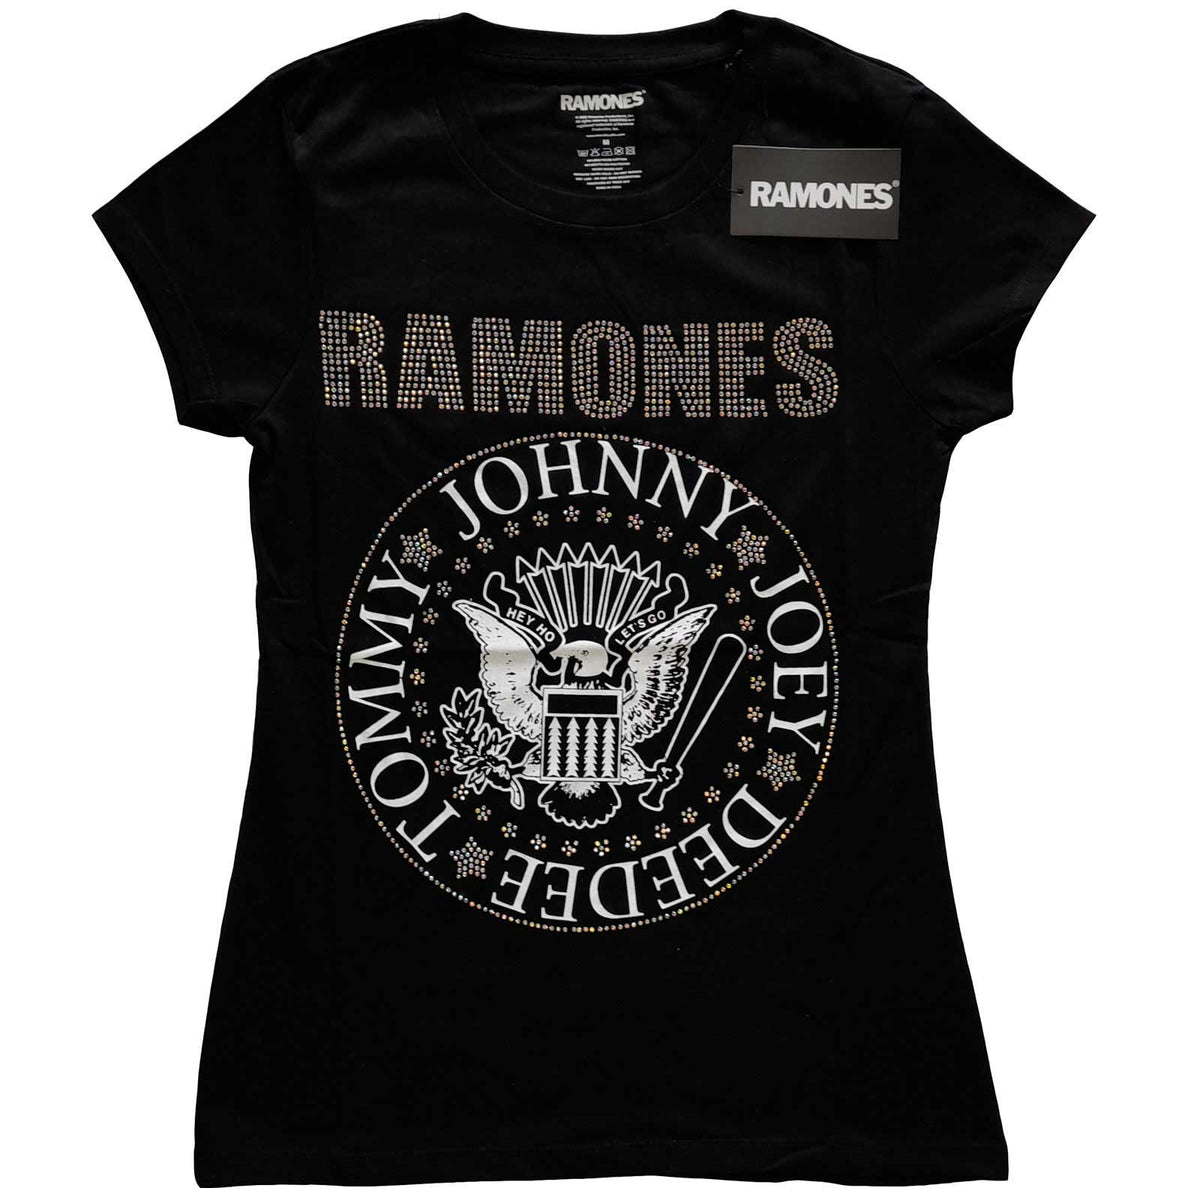 The Ramones Ladies T-Shirt - Presidential Seal Diamante  - Official Licensed Design